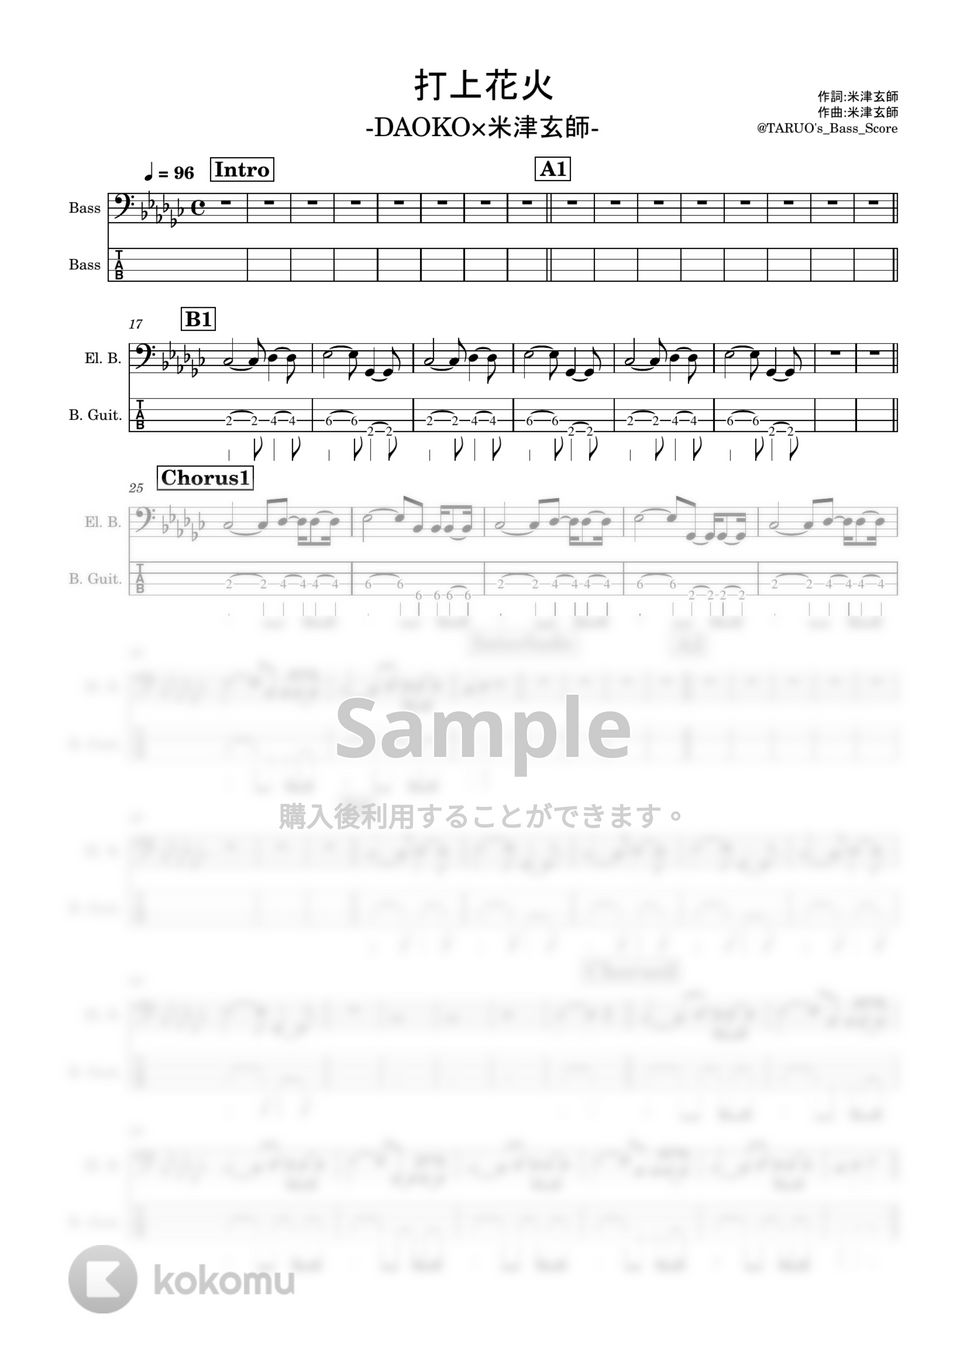 DAOKO×米津玄師 - 打上花火 (ベース / 4弦 / TAB) by TARUO's_Bass_Score